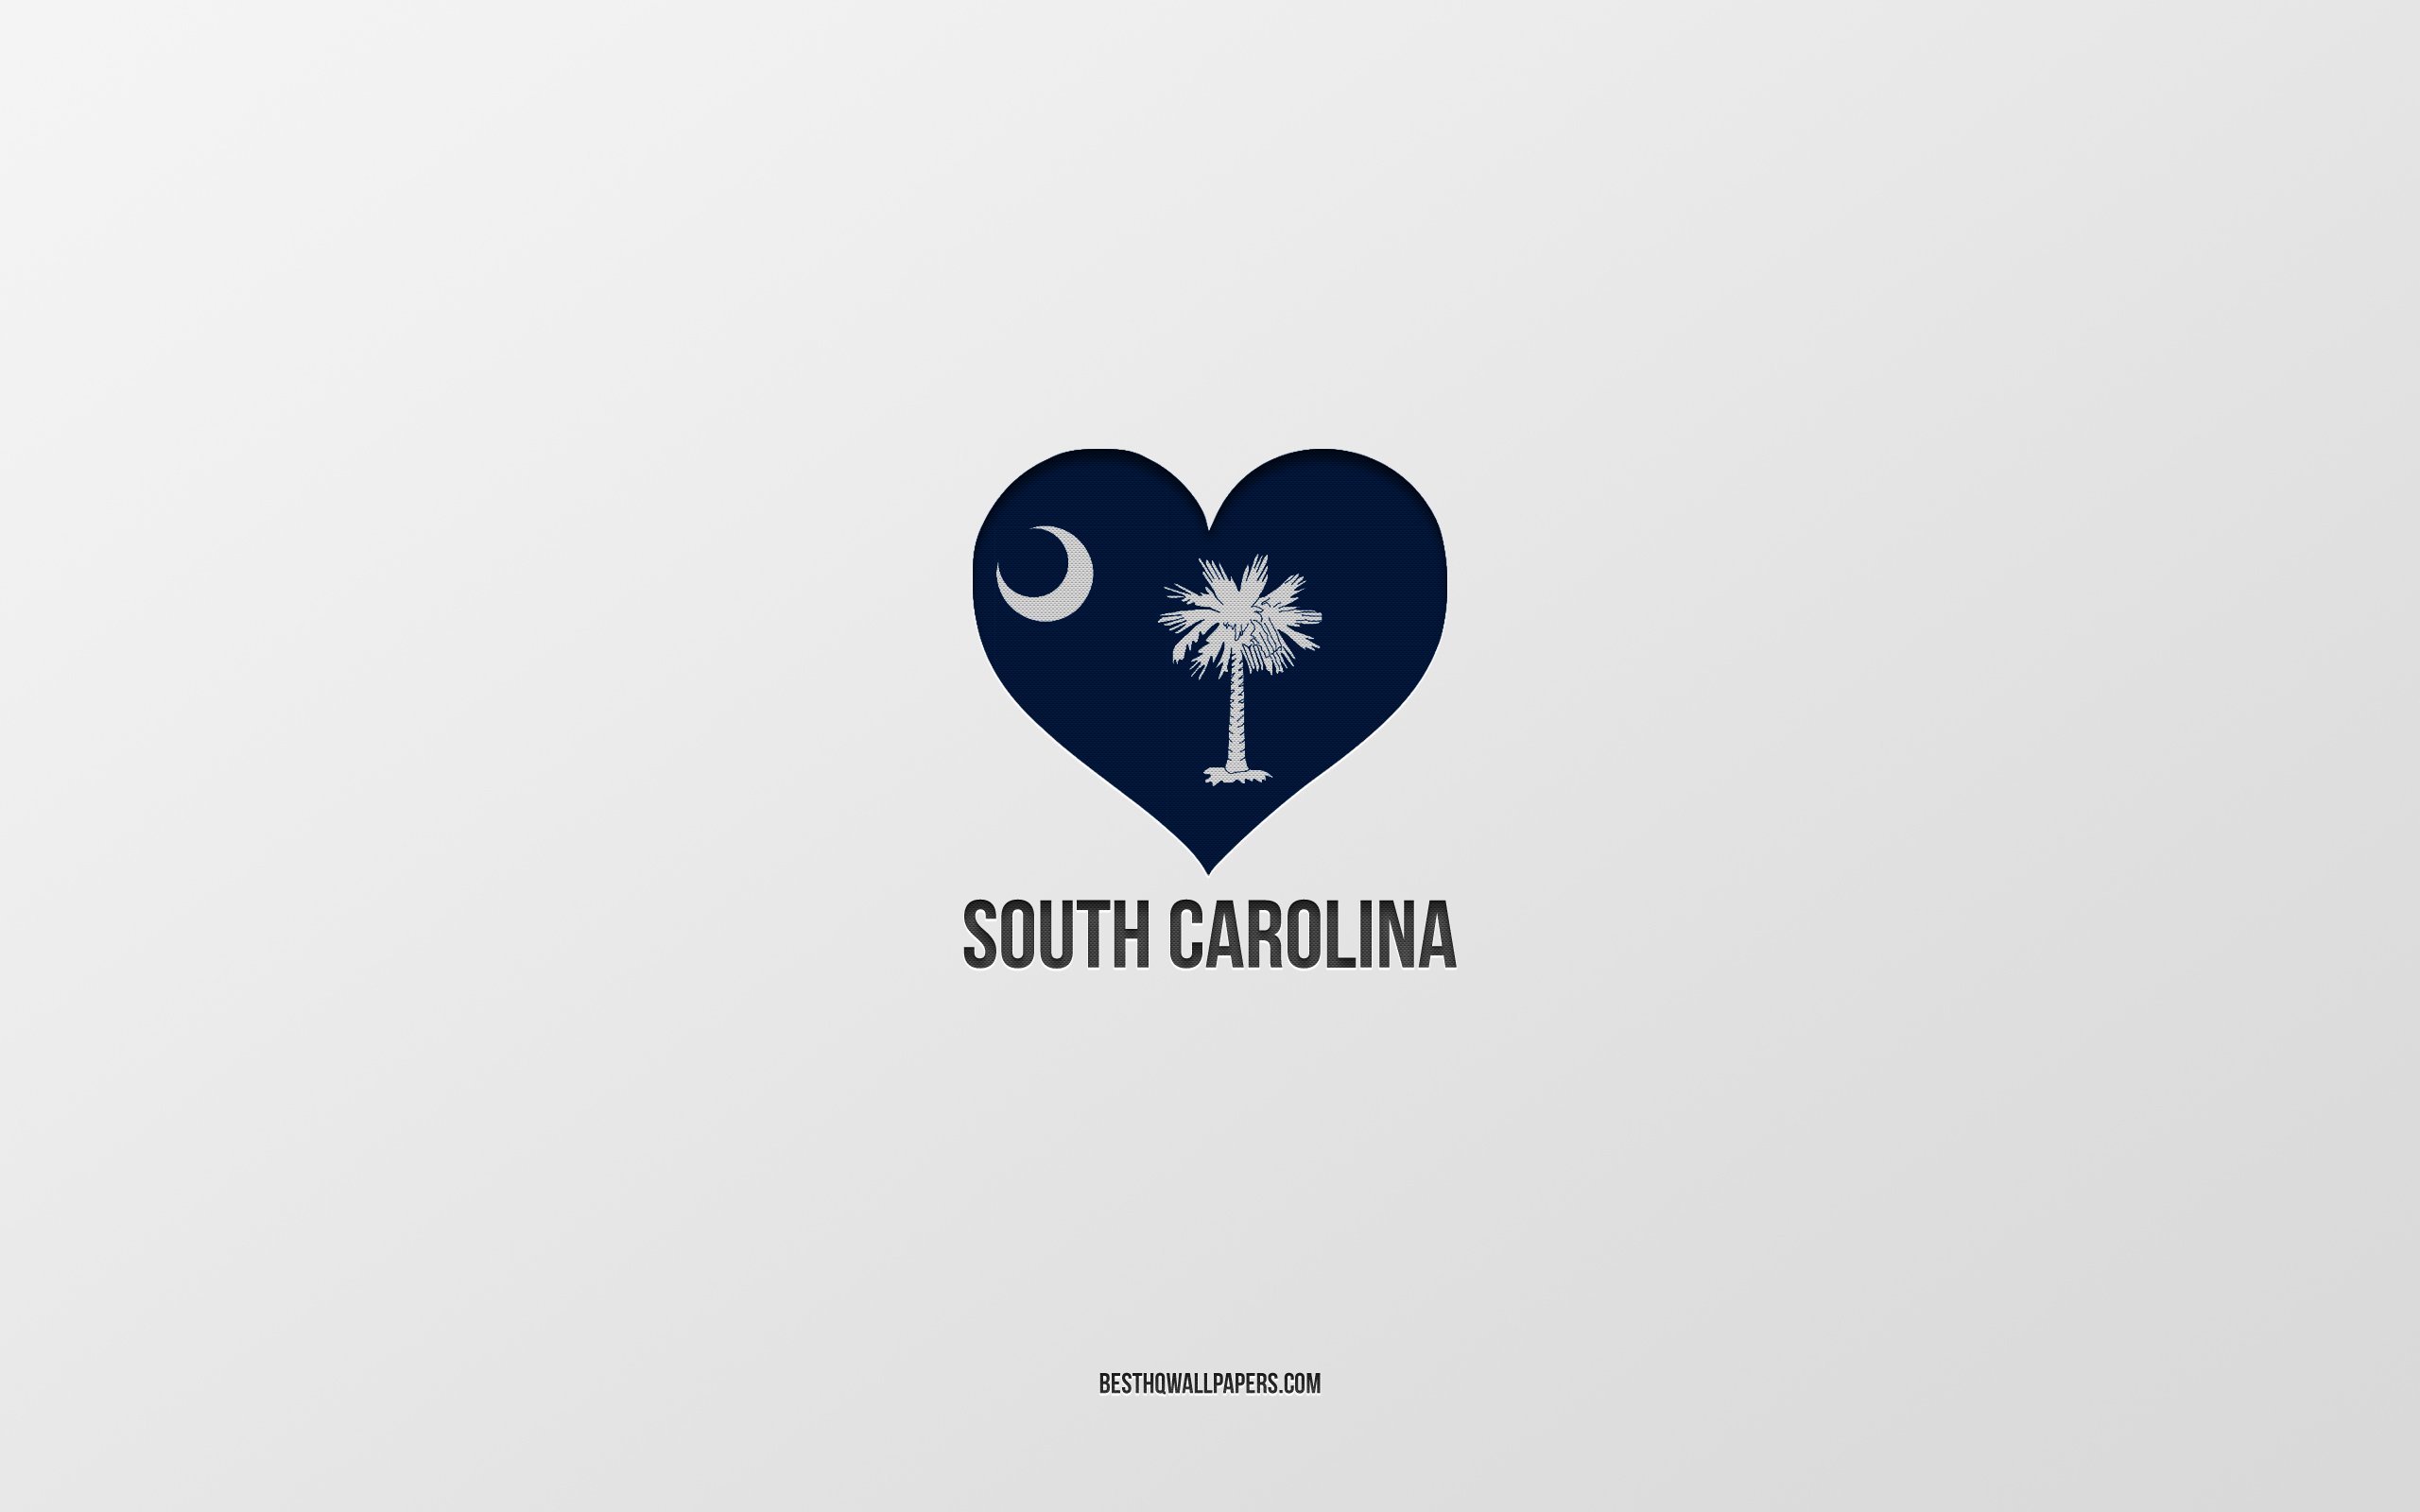 Love s strange. North Carolina Flag Heart. Background s dimom.